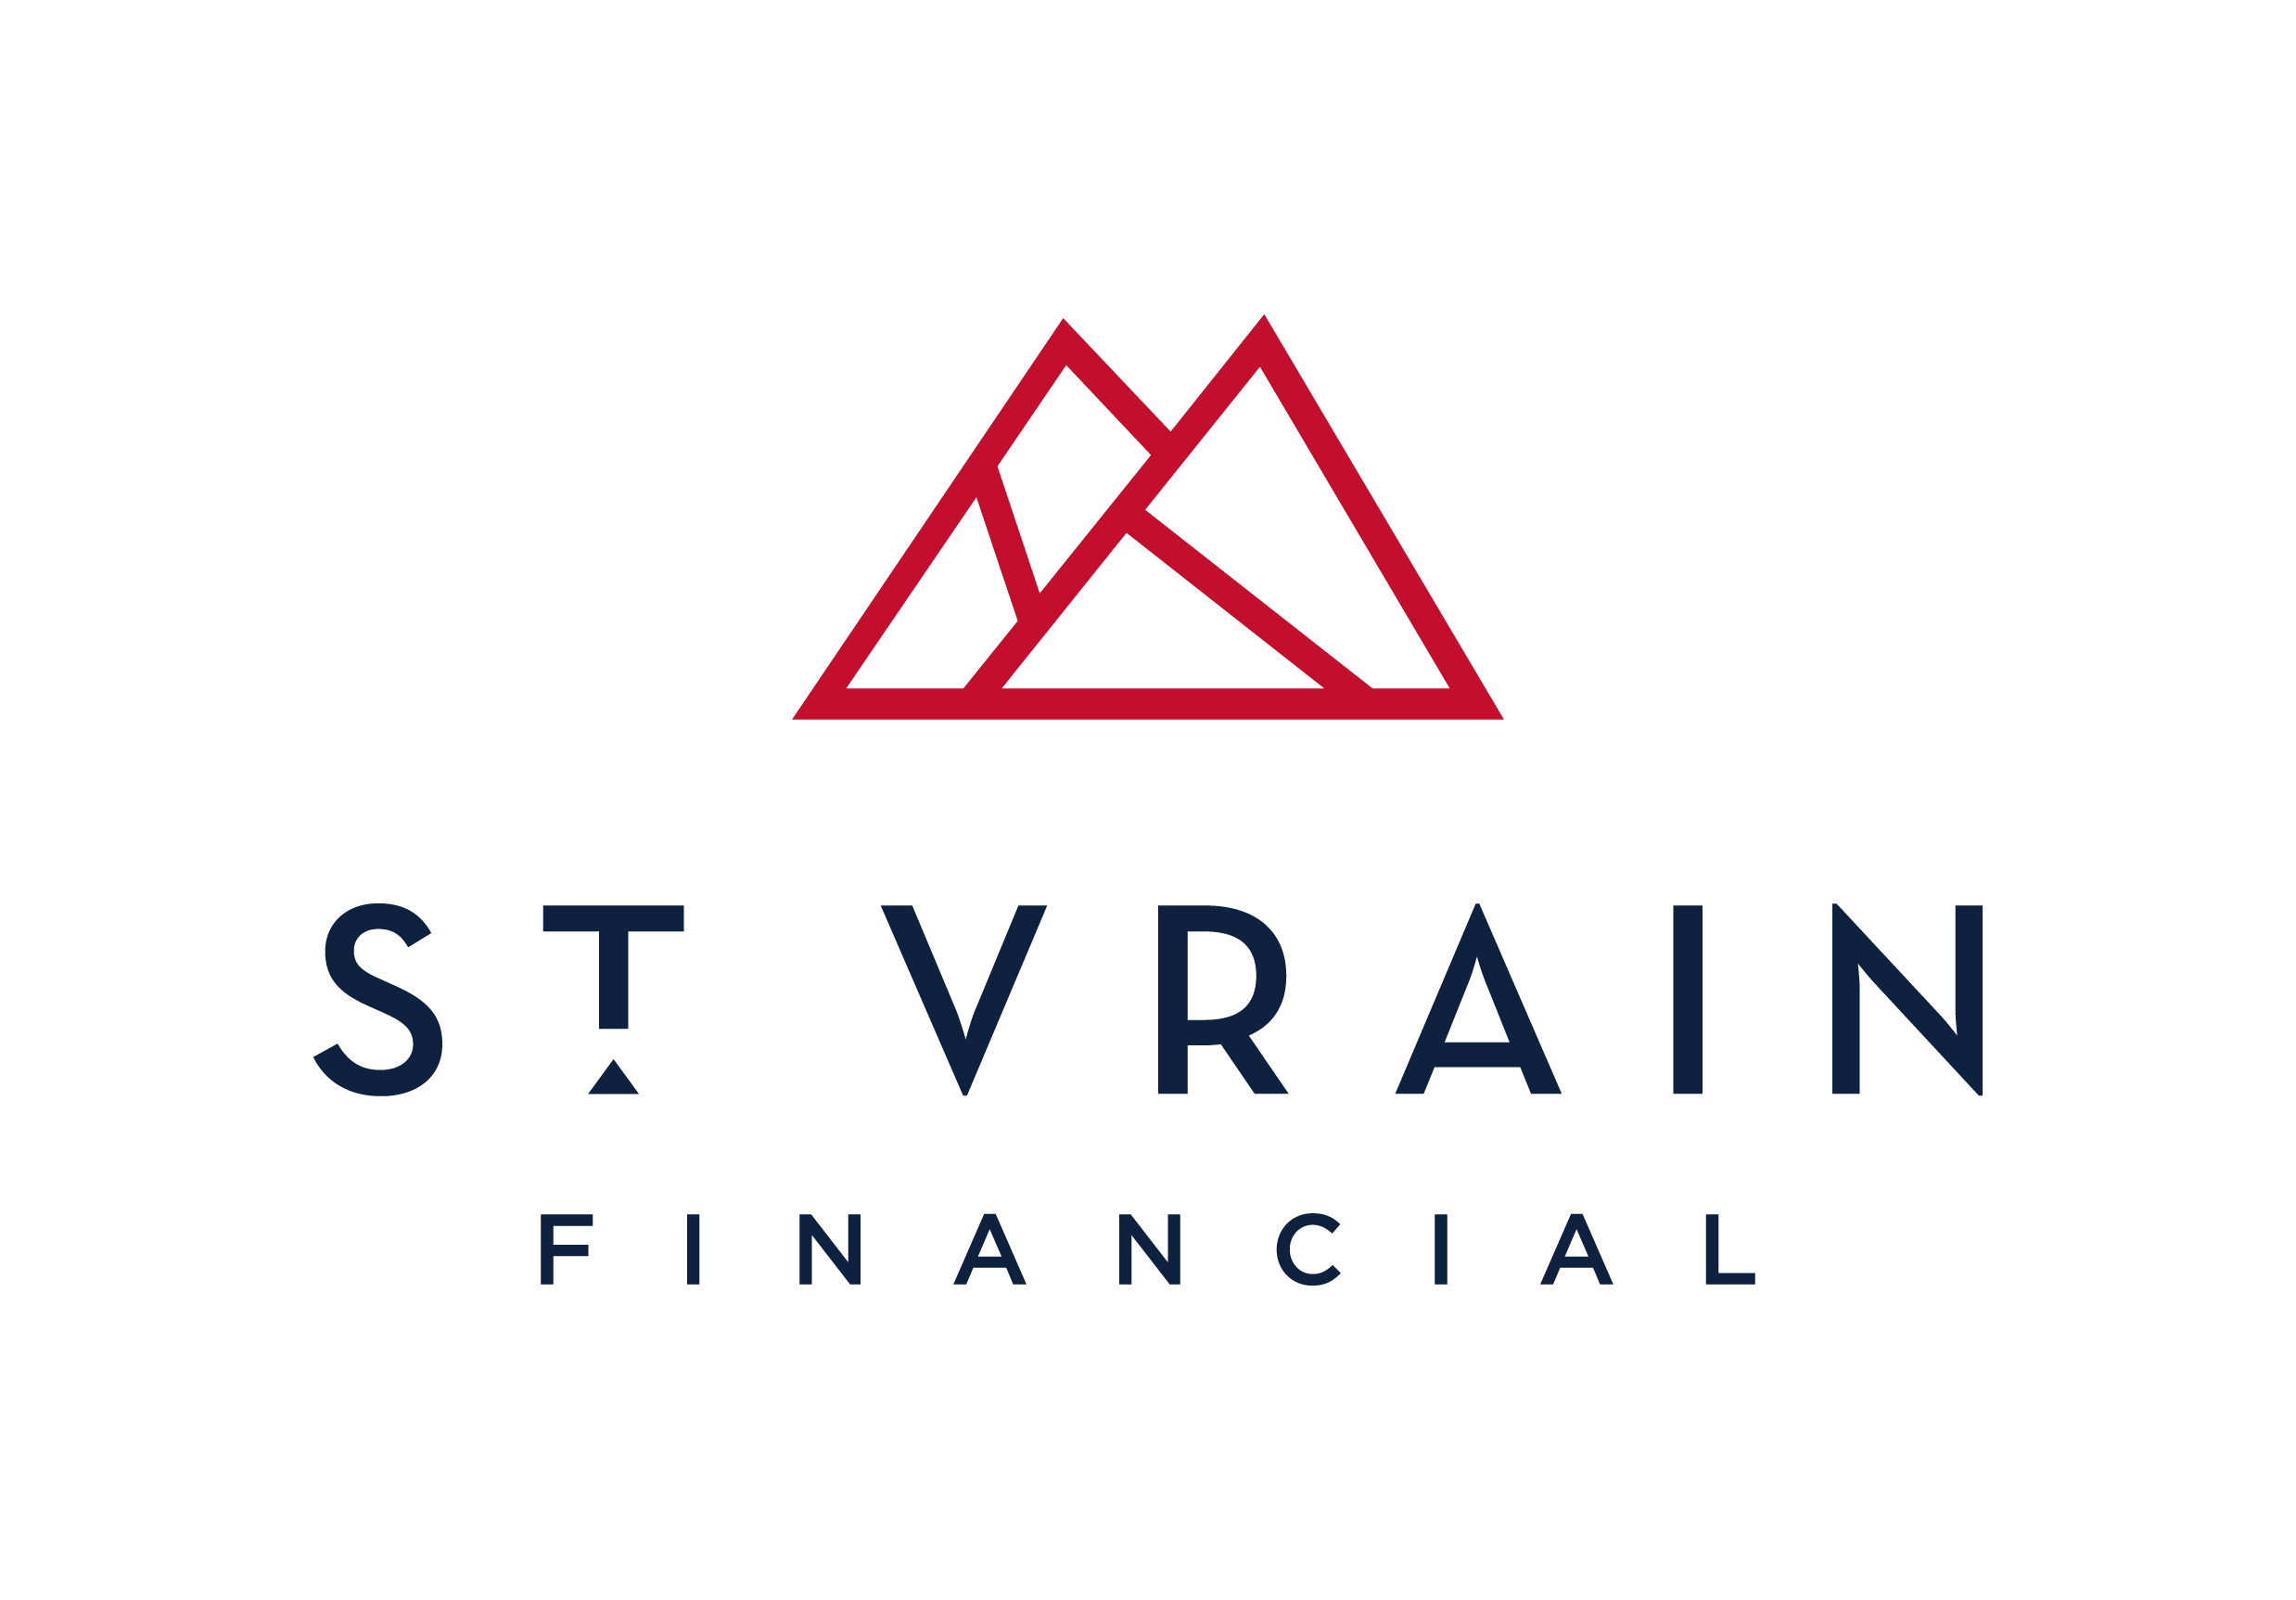 St. Vrain Financial